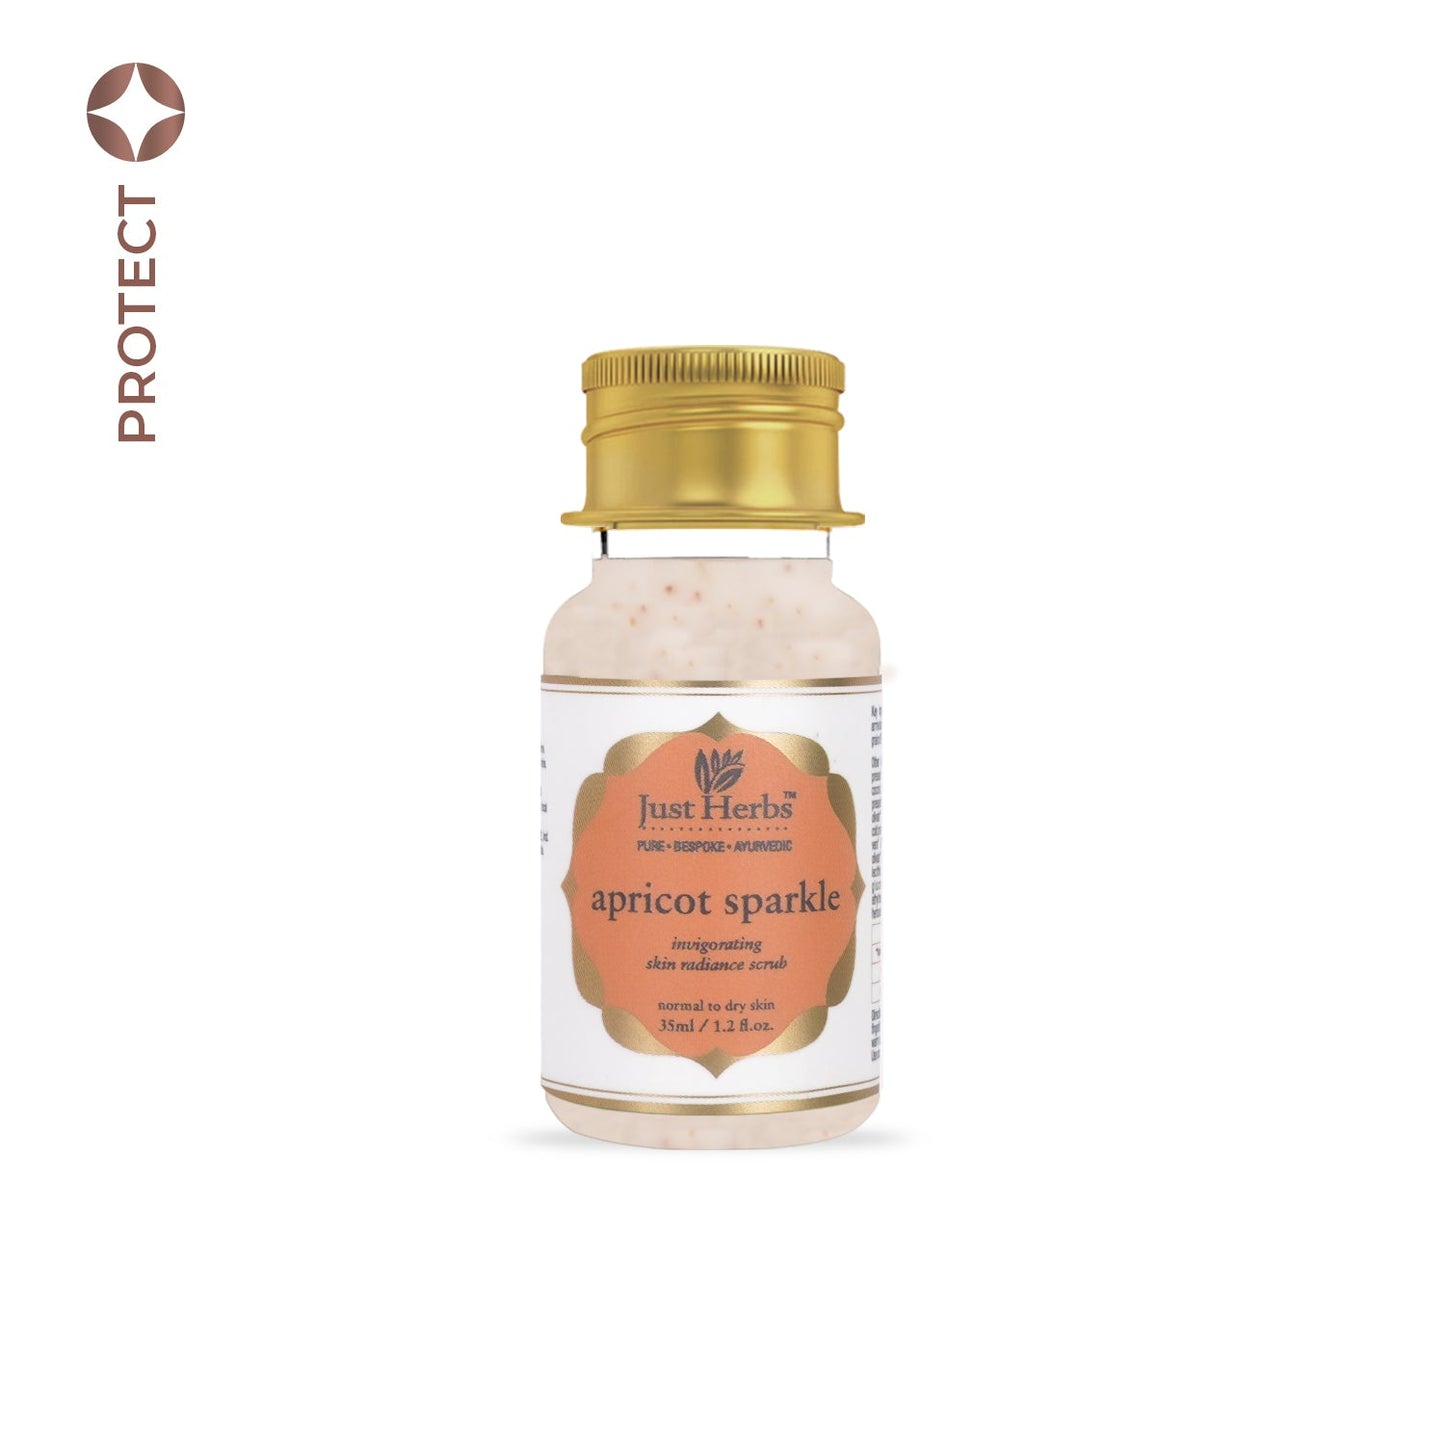 Apricot Sparkle Invigorating Skin Radiance Scrub 35 ml